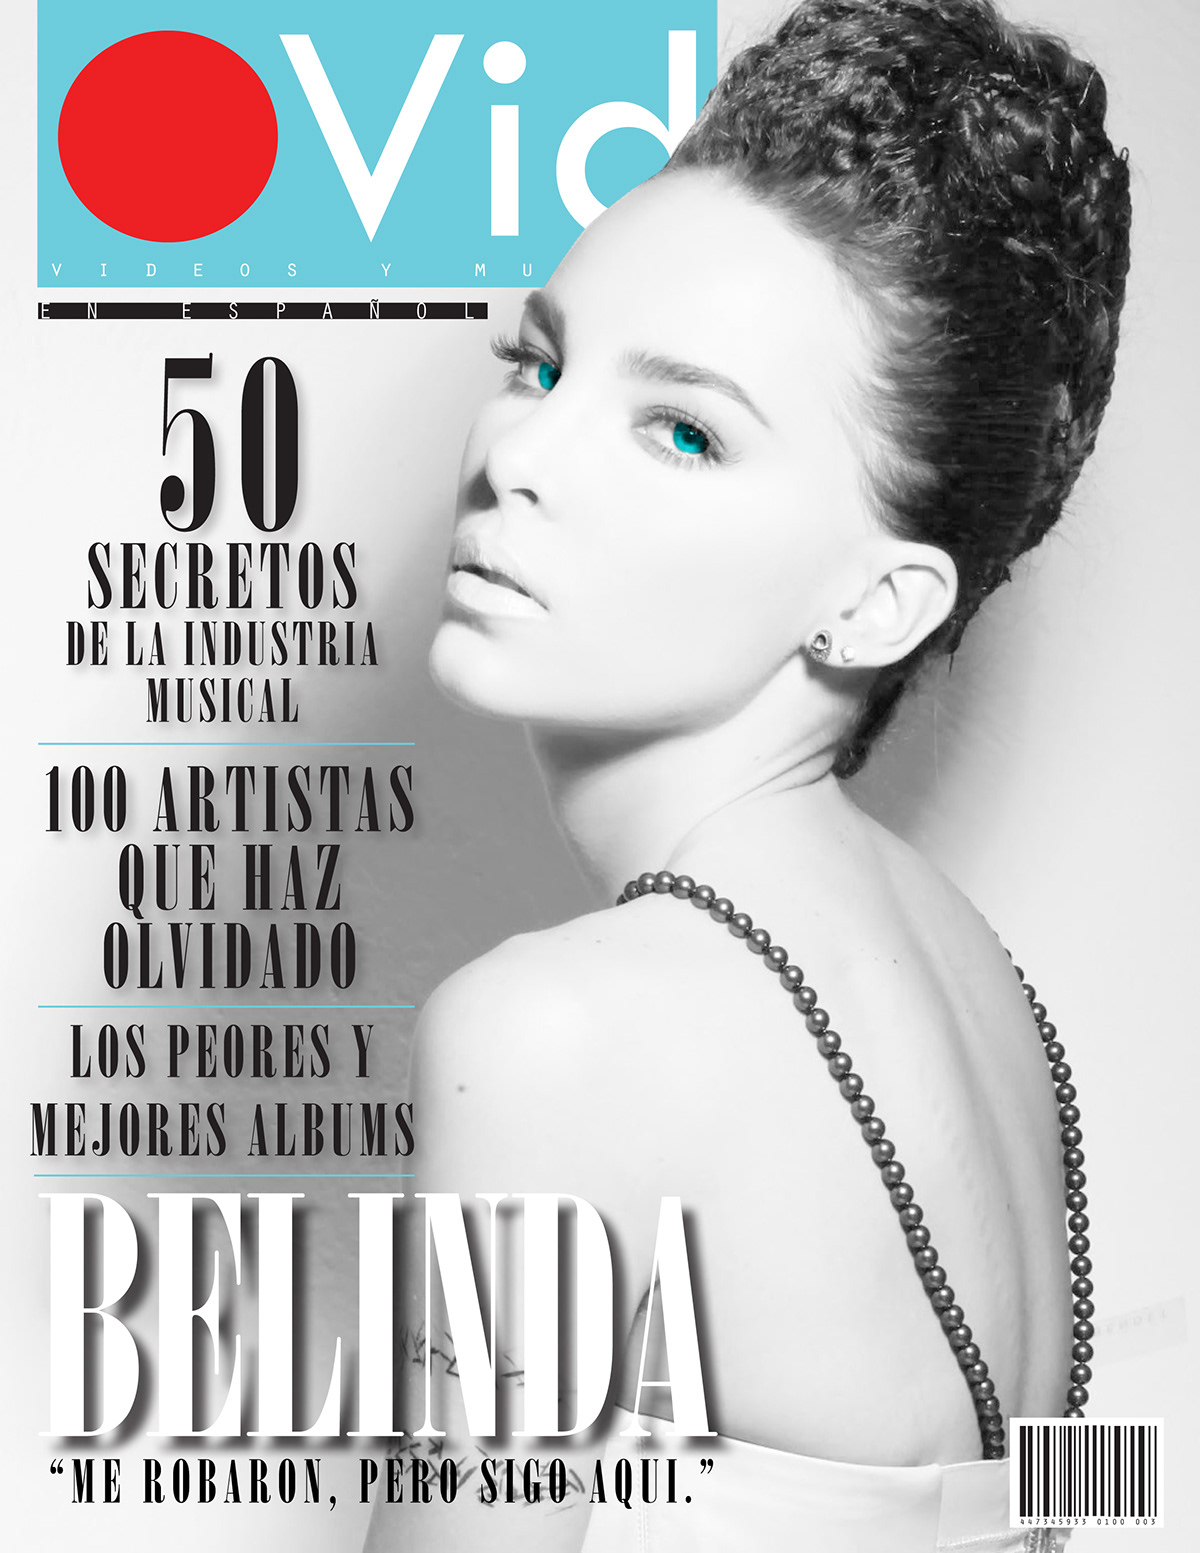 magazine Belinda  spread cover pop culture black & white Style modern classy